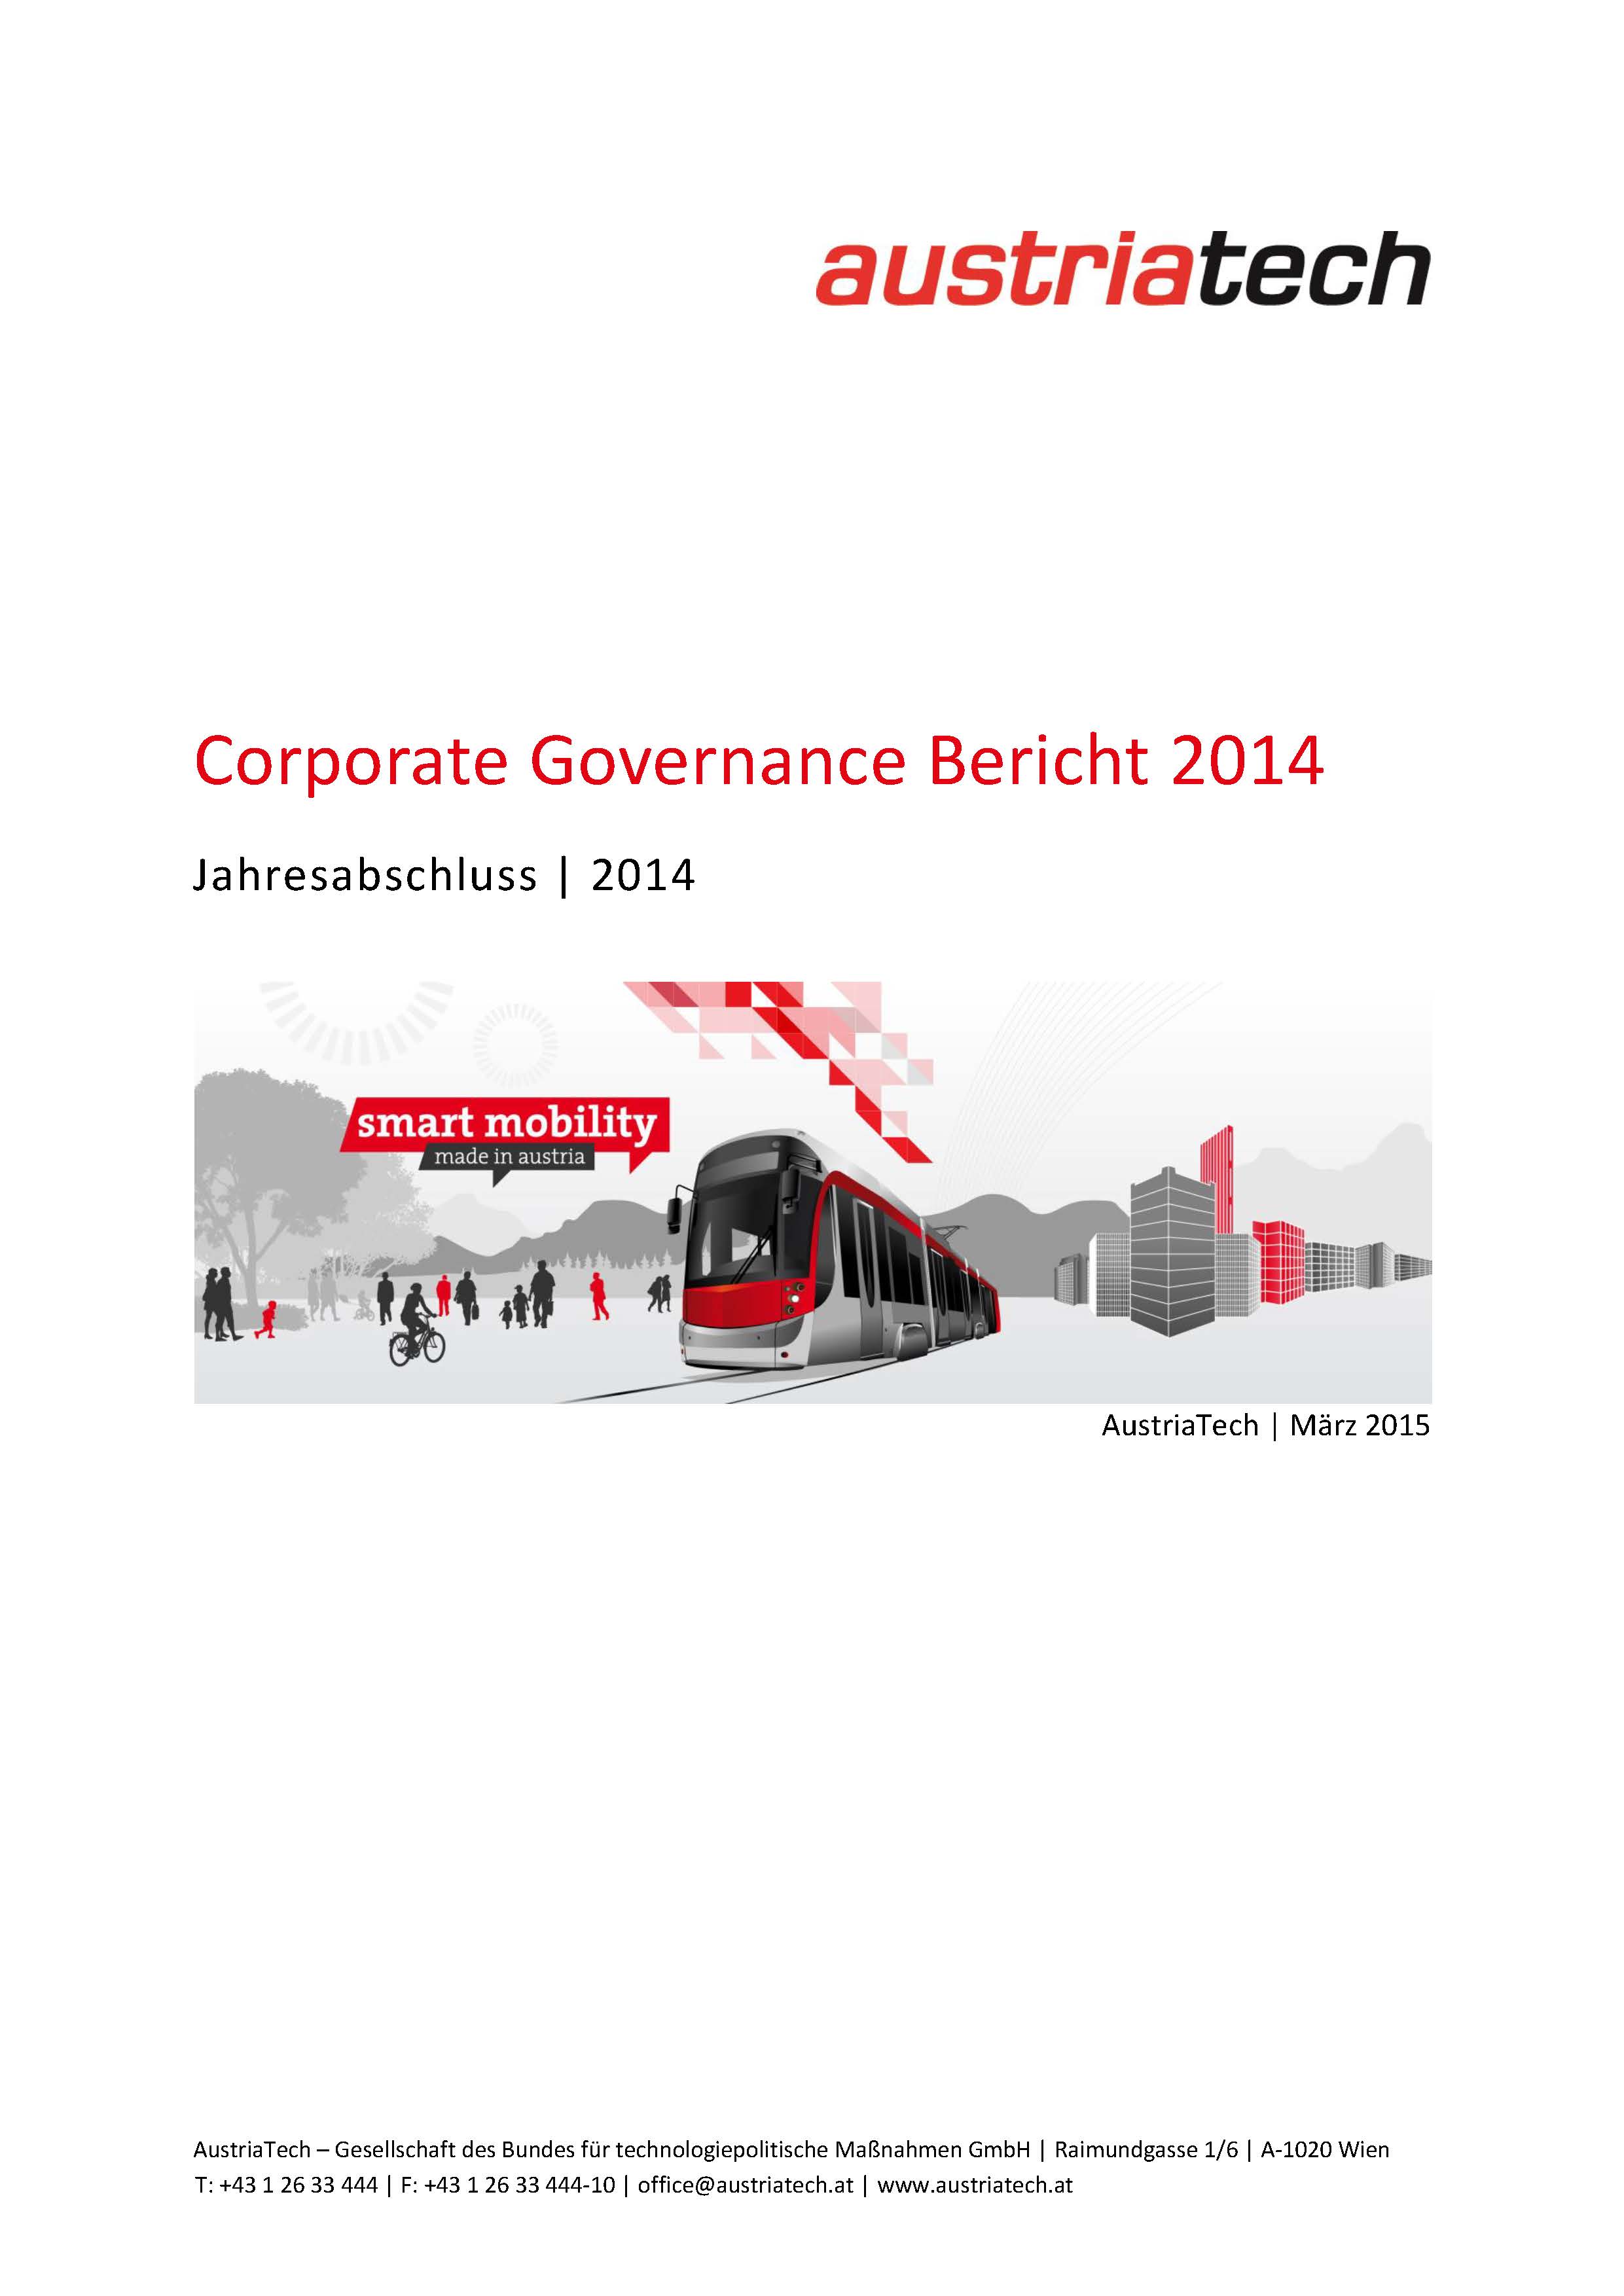 AustriaTech Corporate Governance 2014